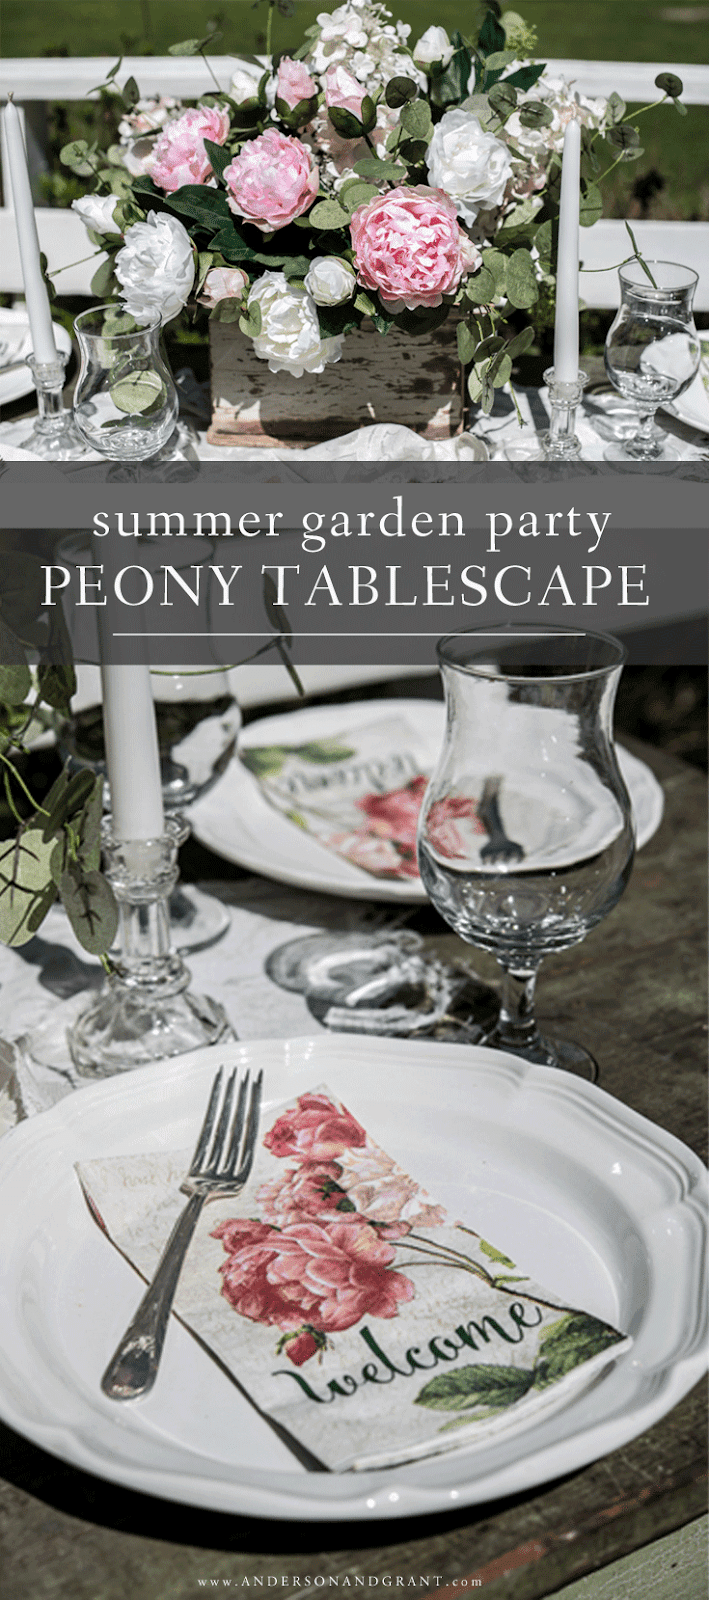 Summer garden party peony tablescape